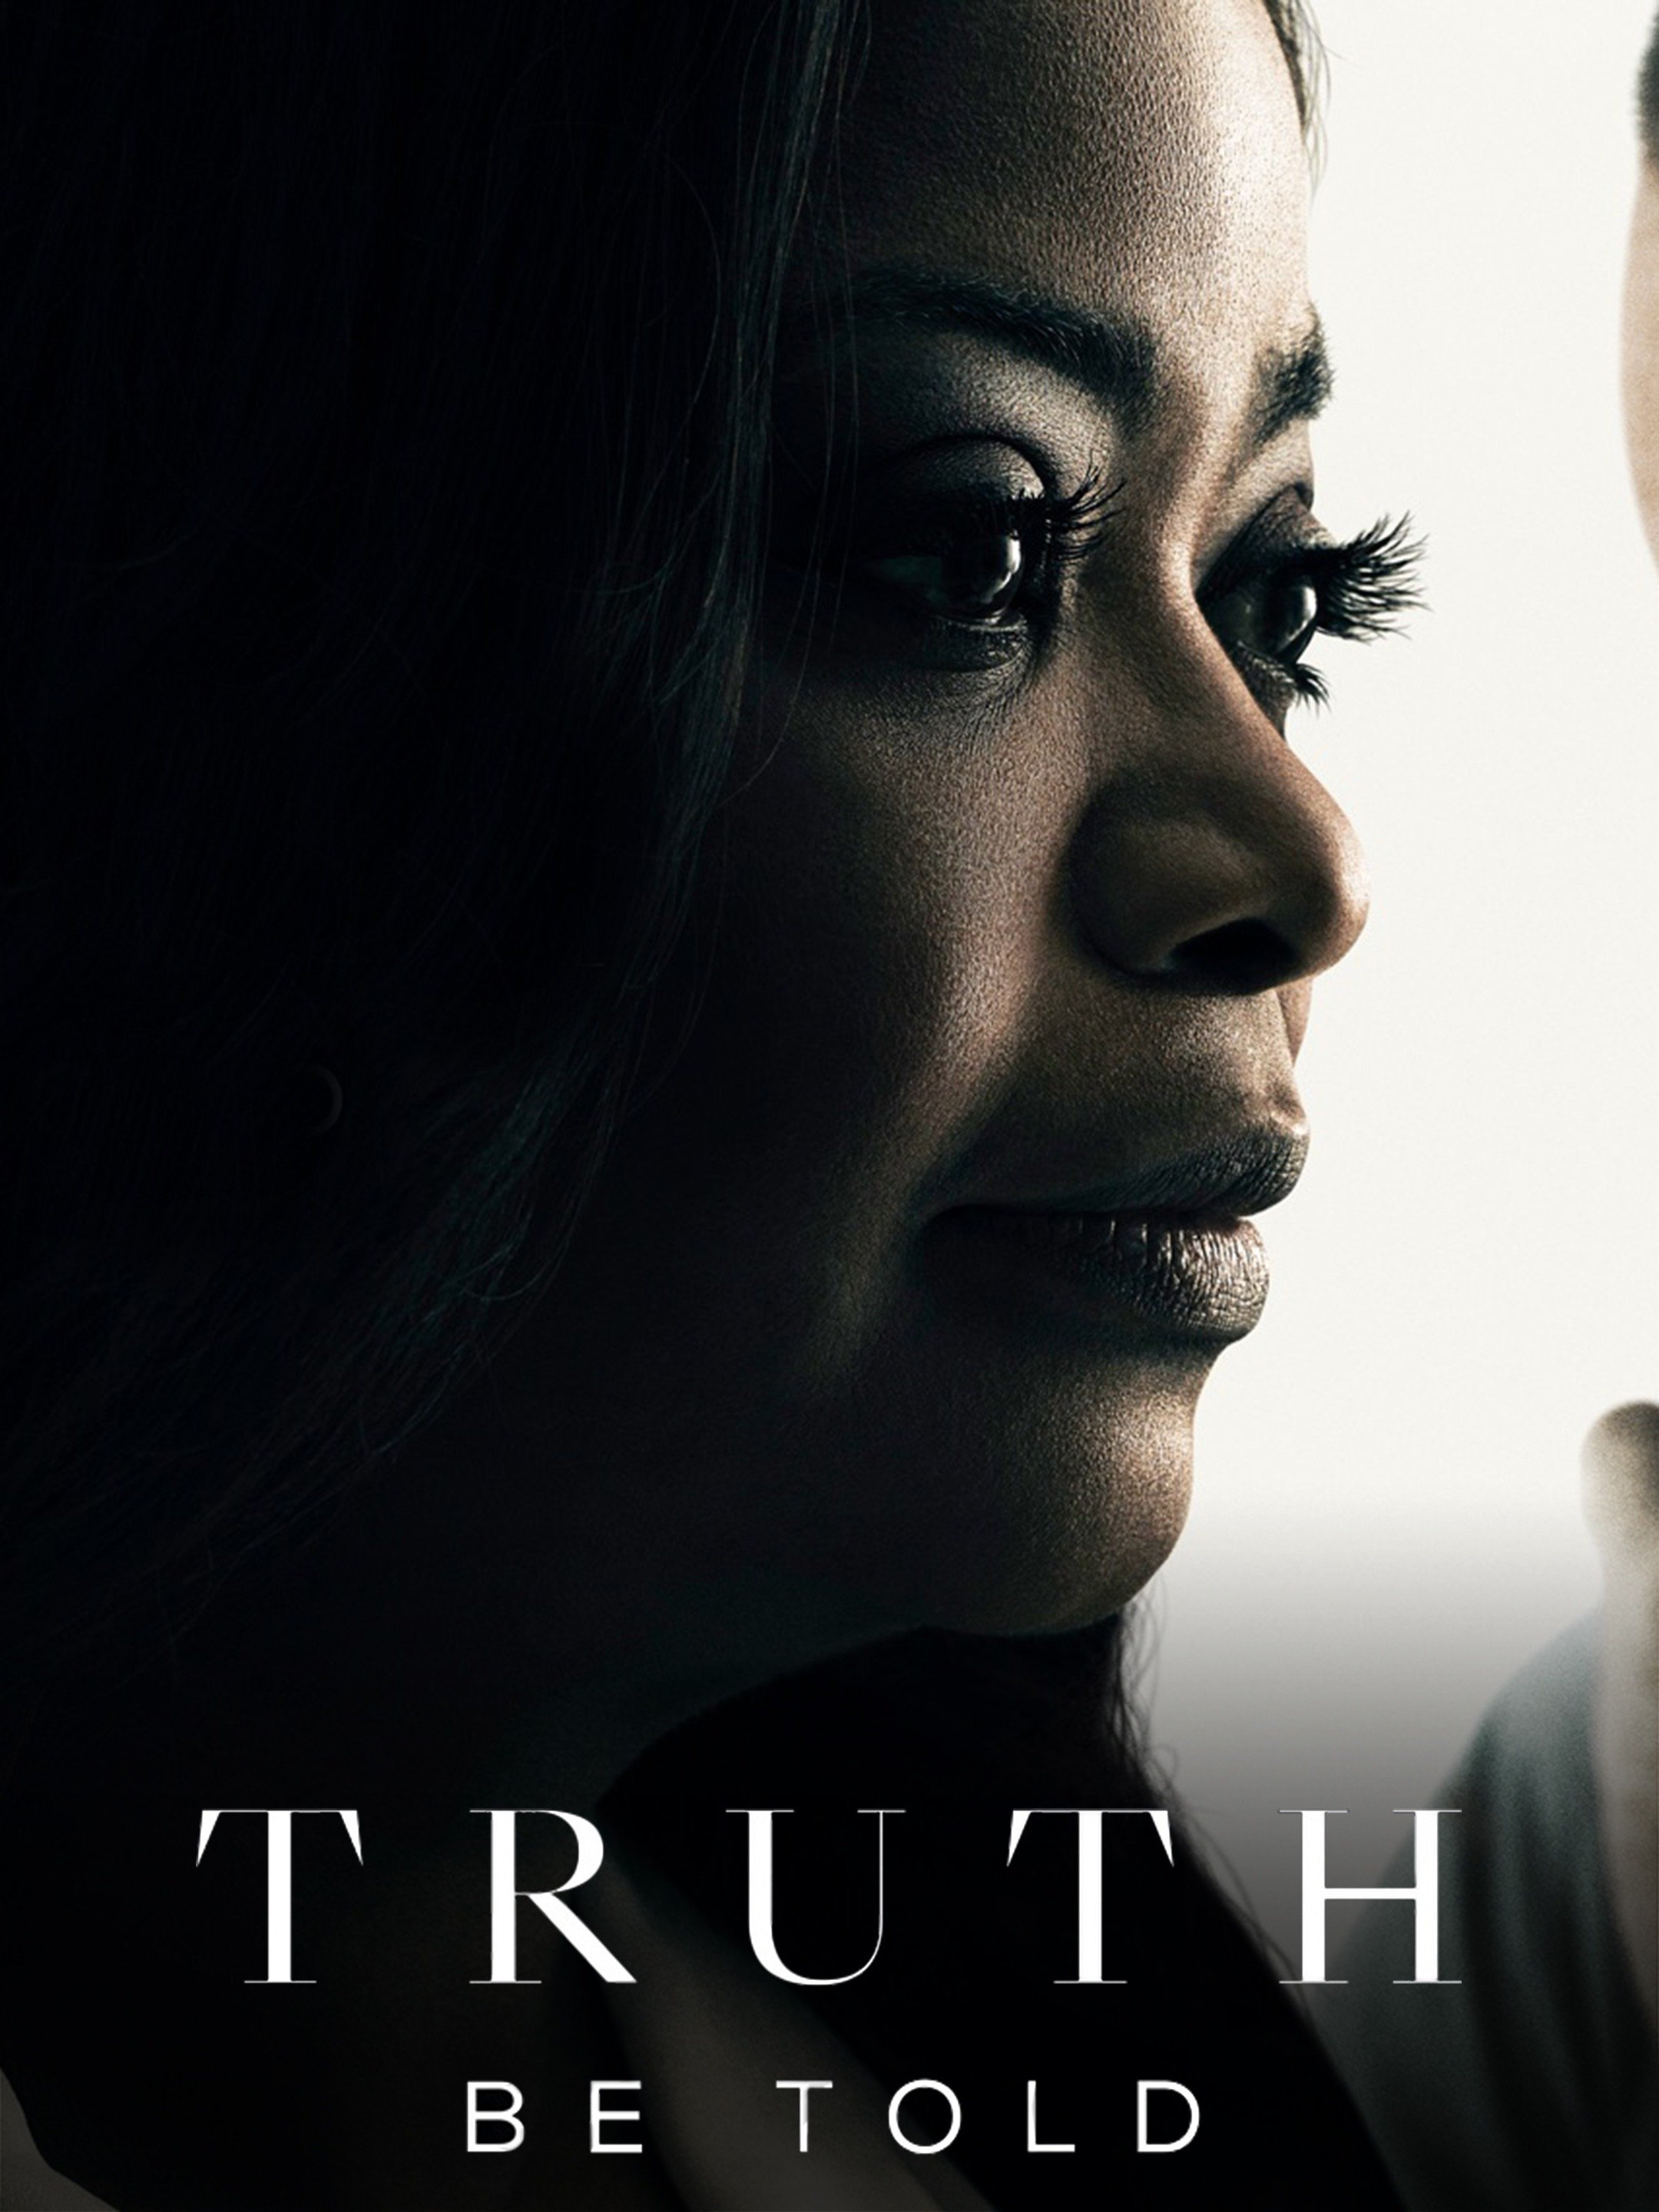 Truth Be Told (2019) – Season 1